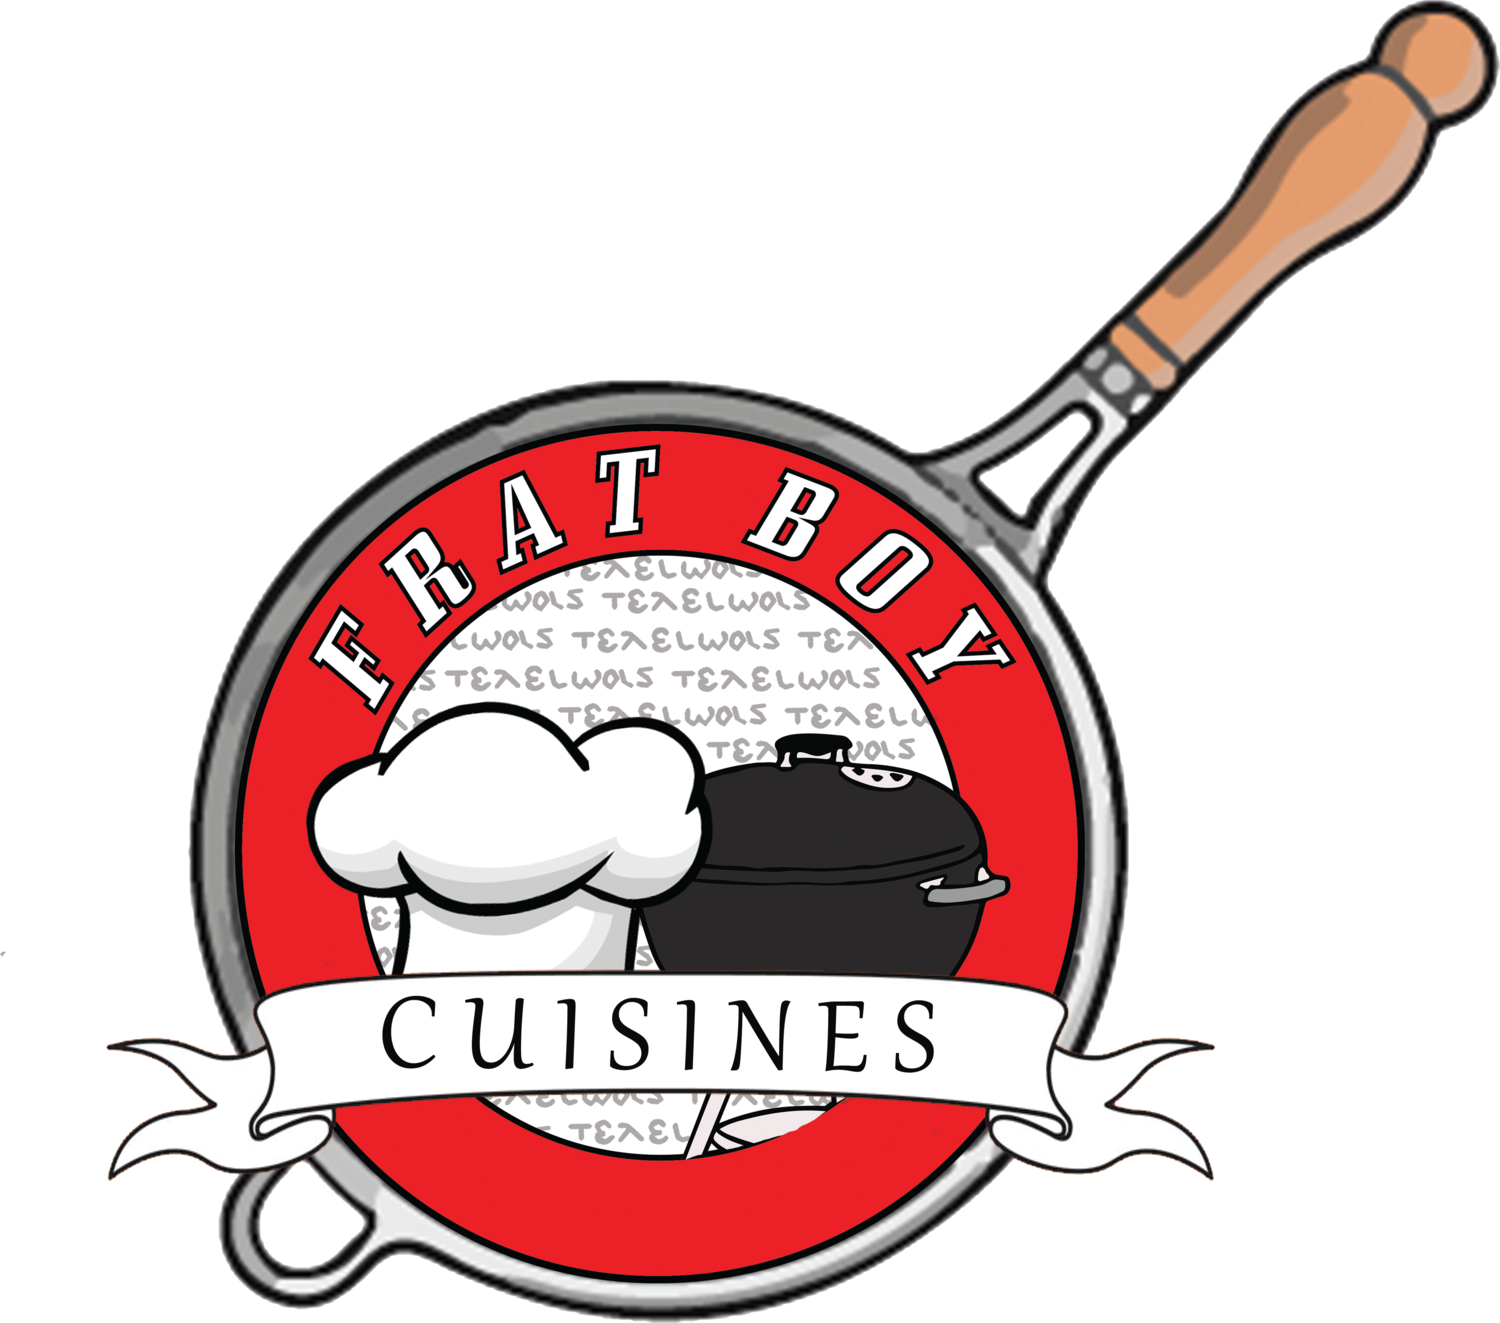 Recipes frat boy cuisines. Cookbook clipart receipe